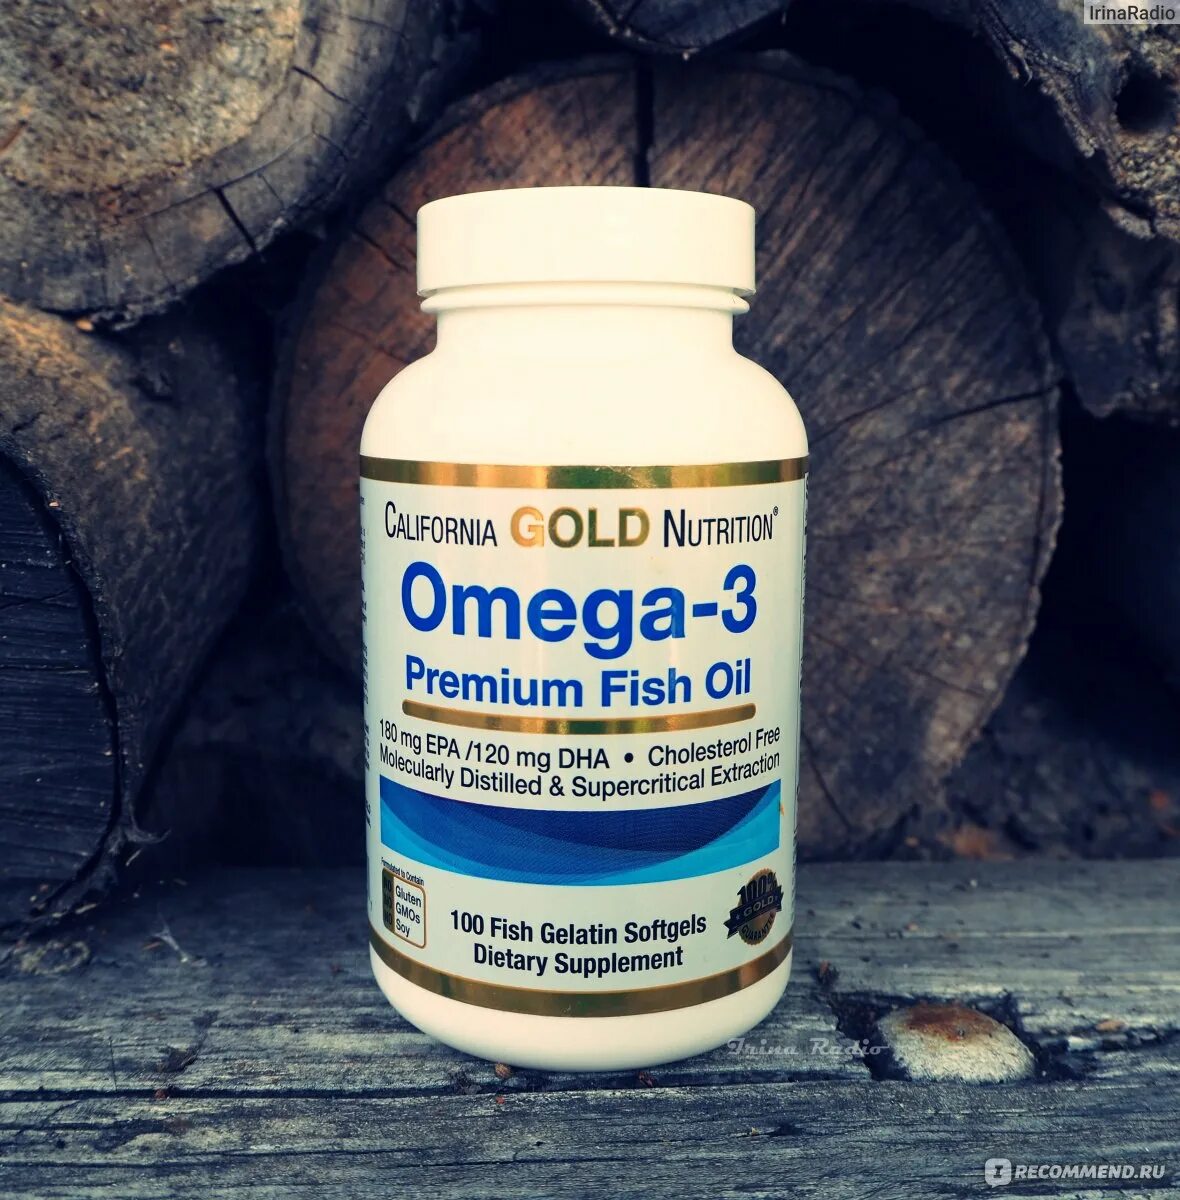 California gold nutrition omega 3 premium fish